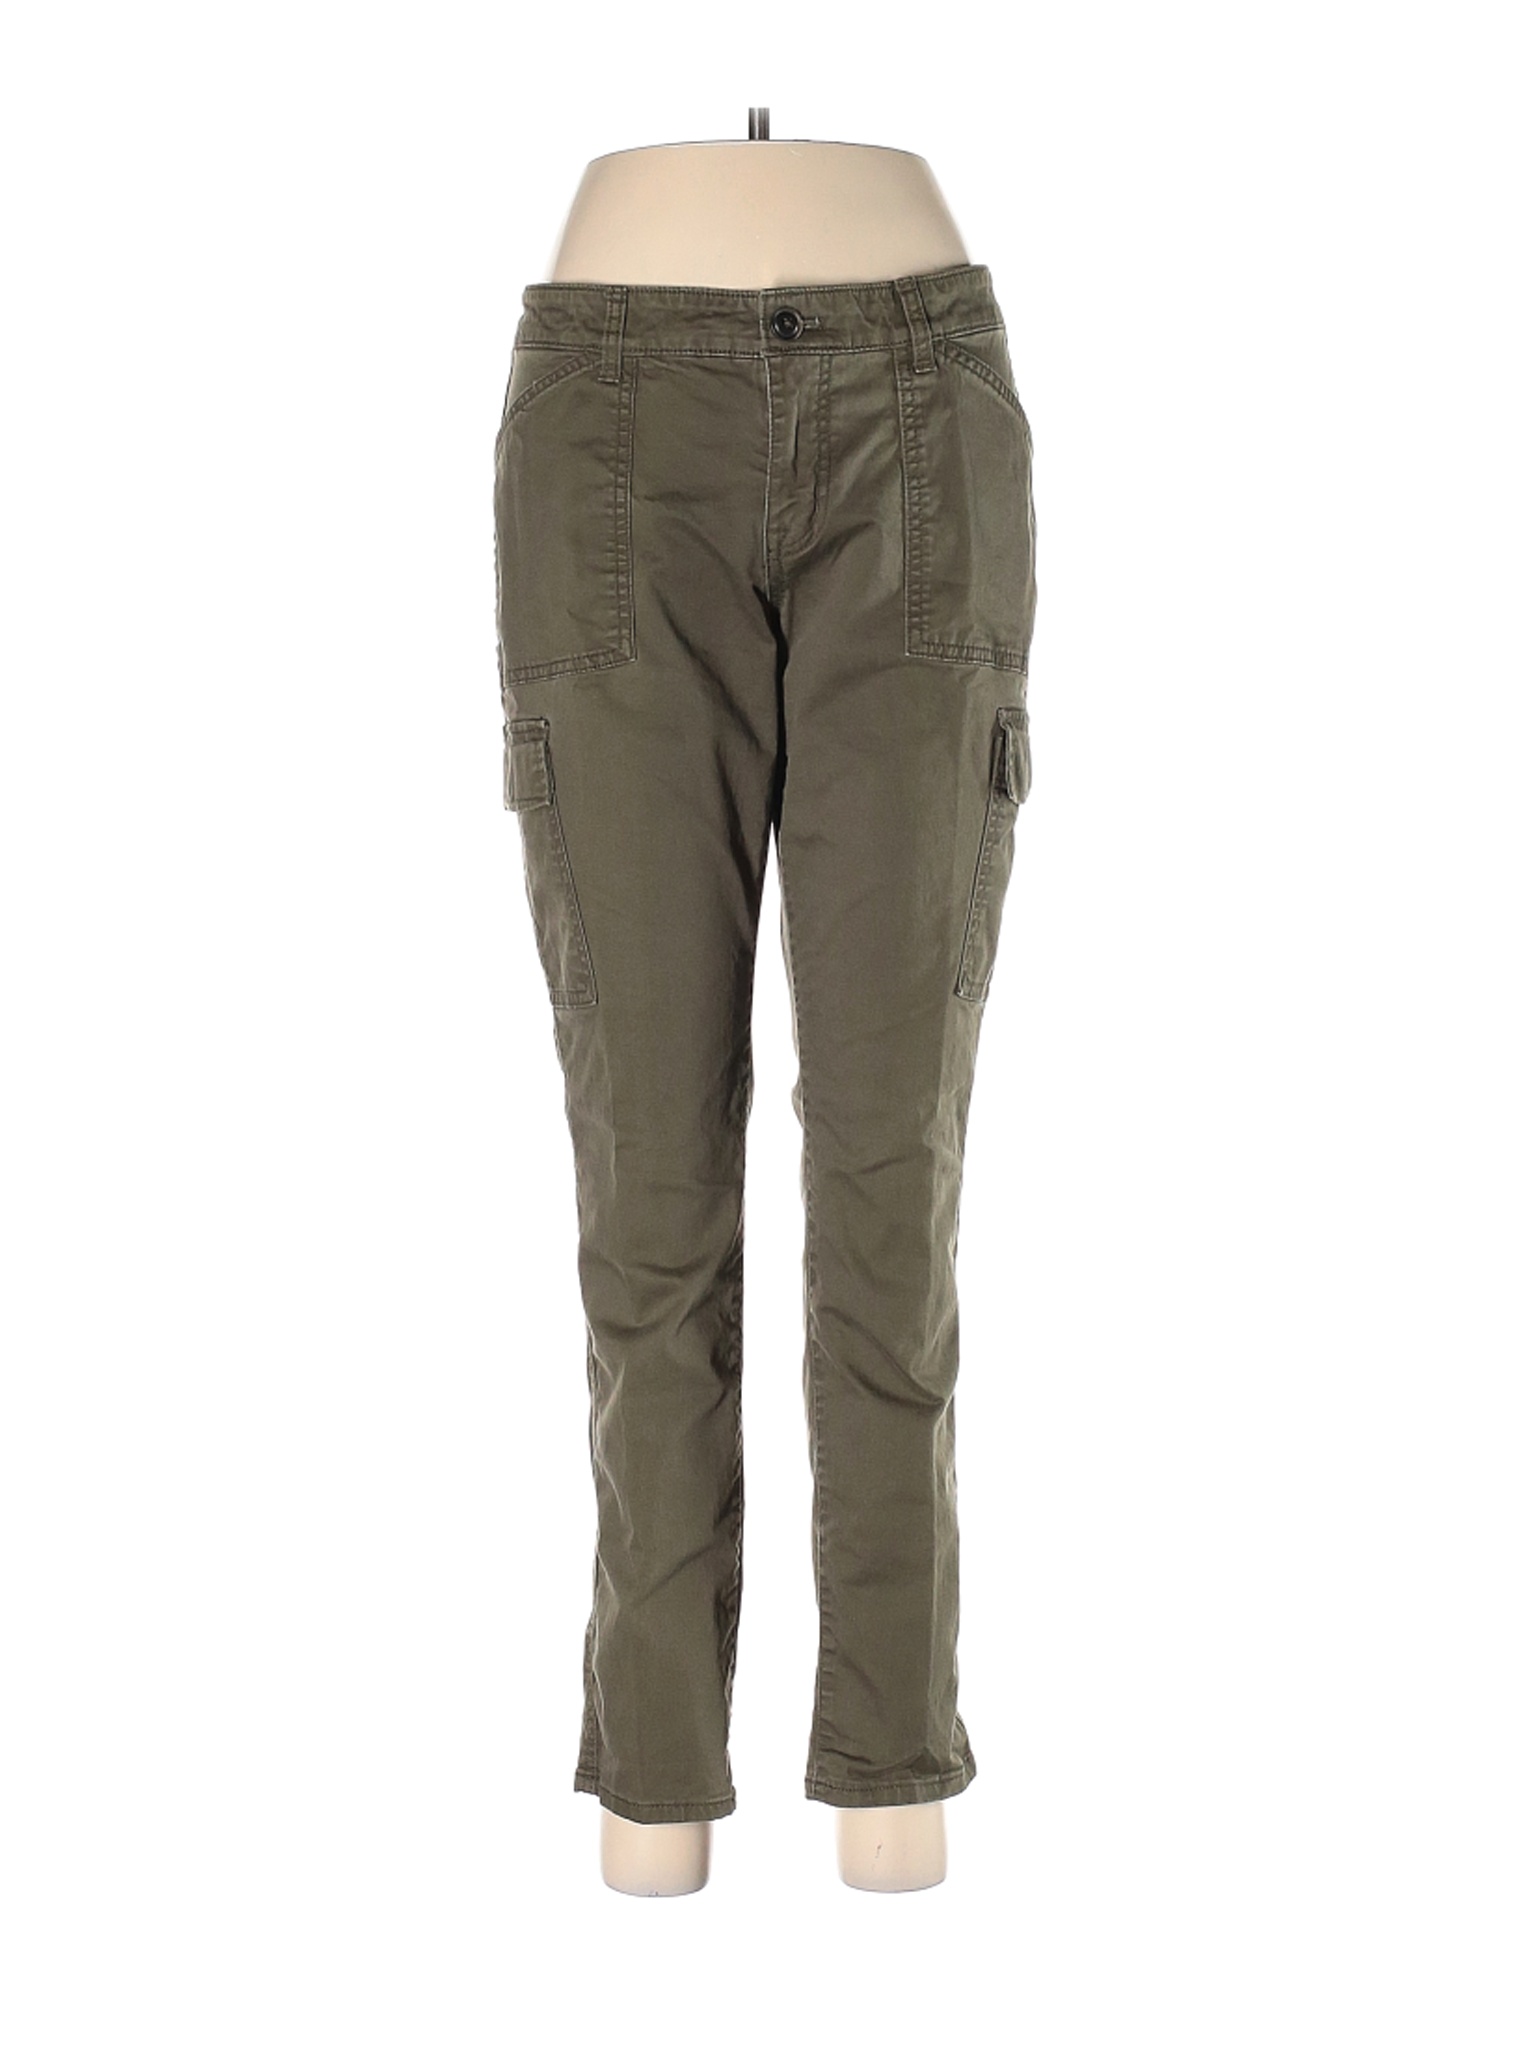 Gap Solid Green Cargo Pants Size 8 - 72% off | thredUP